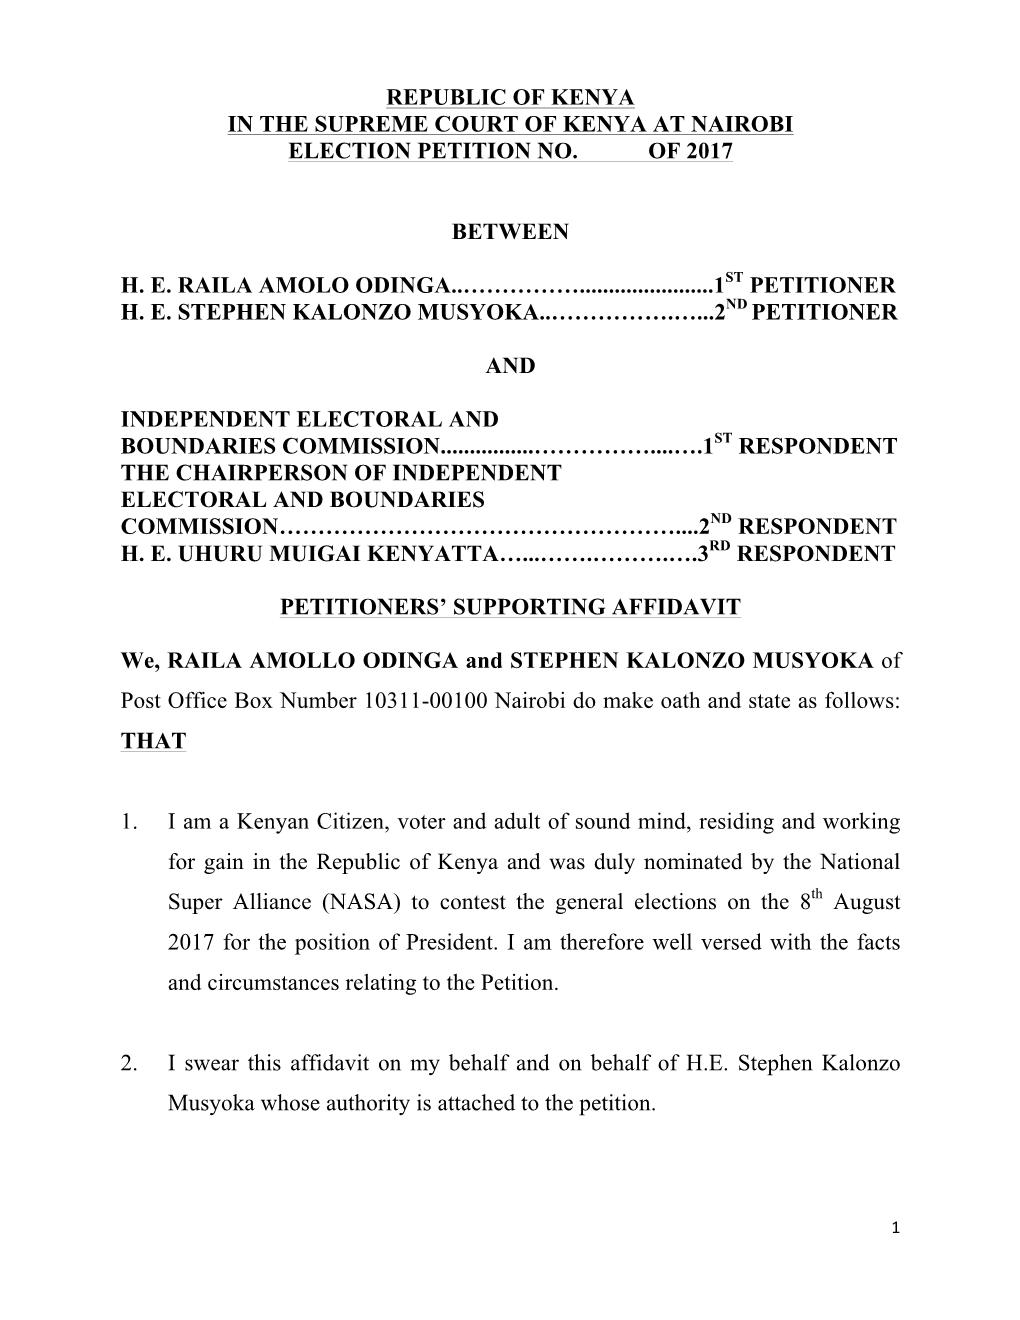 Republic of Kenya in the Supreme Court of Kenya at Nairobi Election Petition No